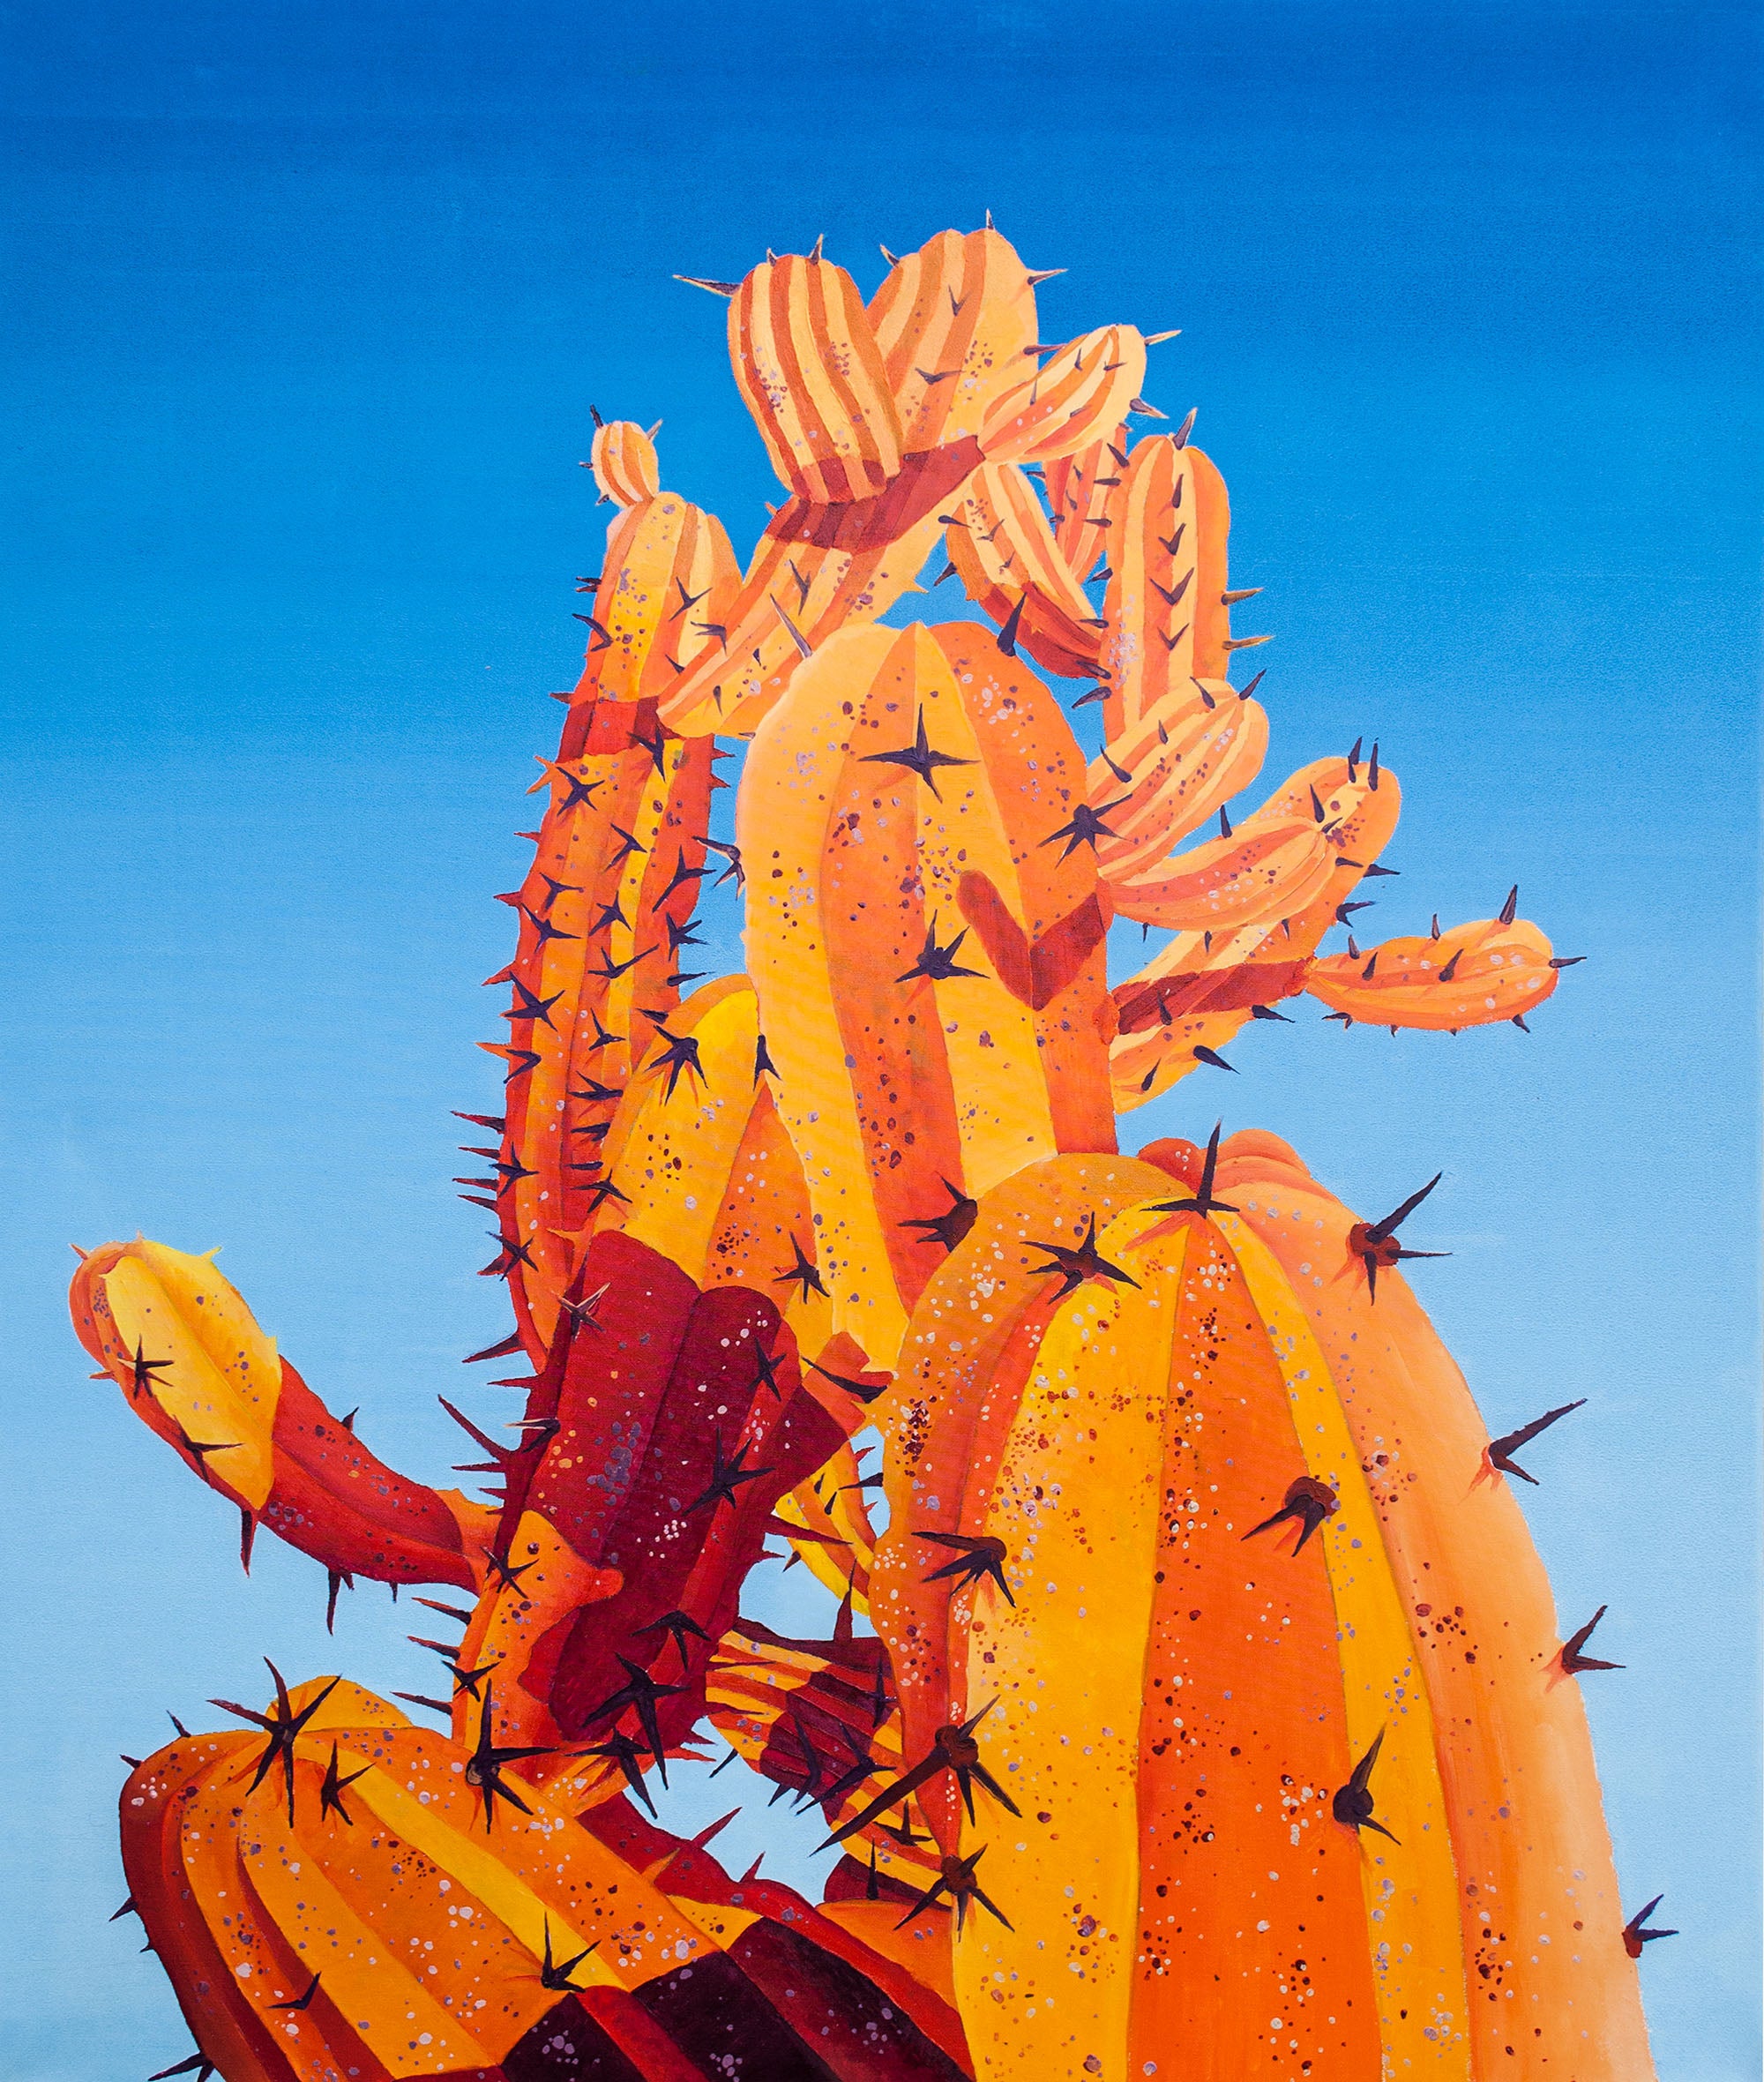 Big Orange on Blue - beautiful cactus painting made in 2021 by Dominic Virtosu